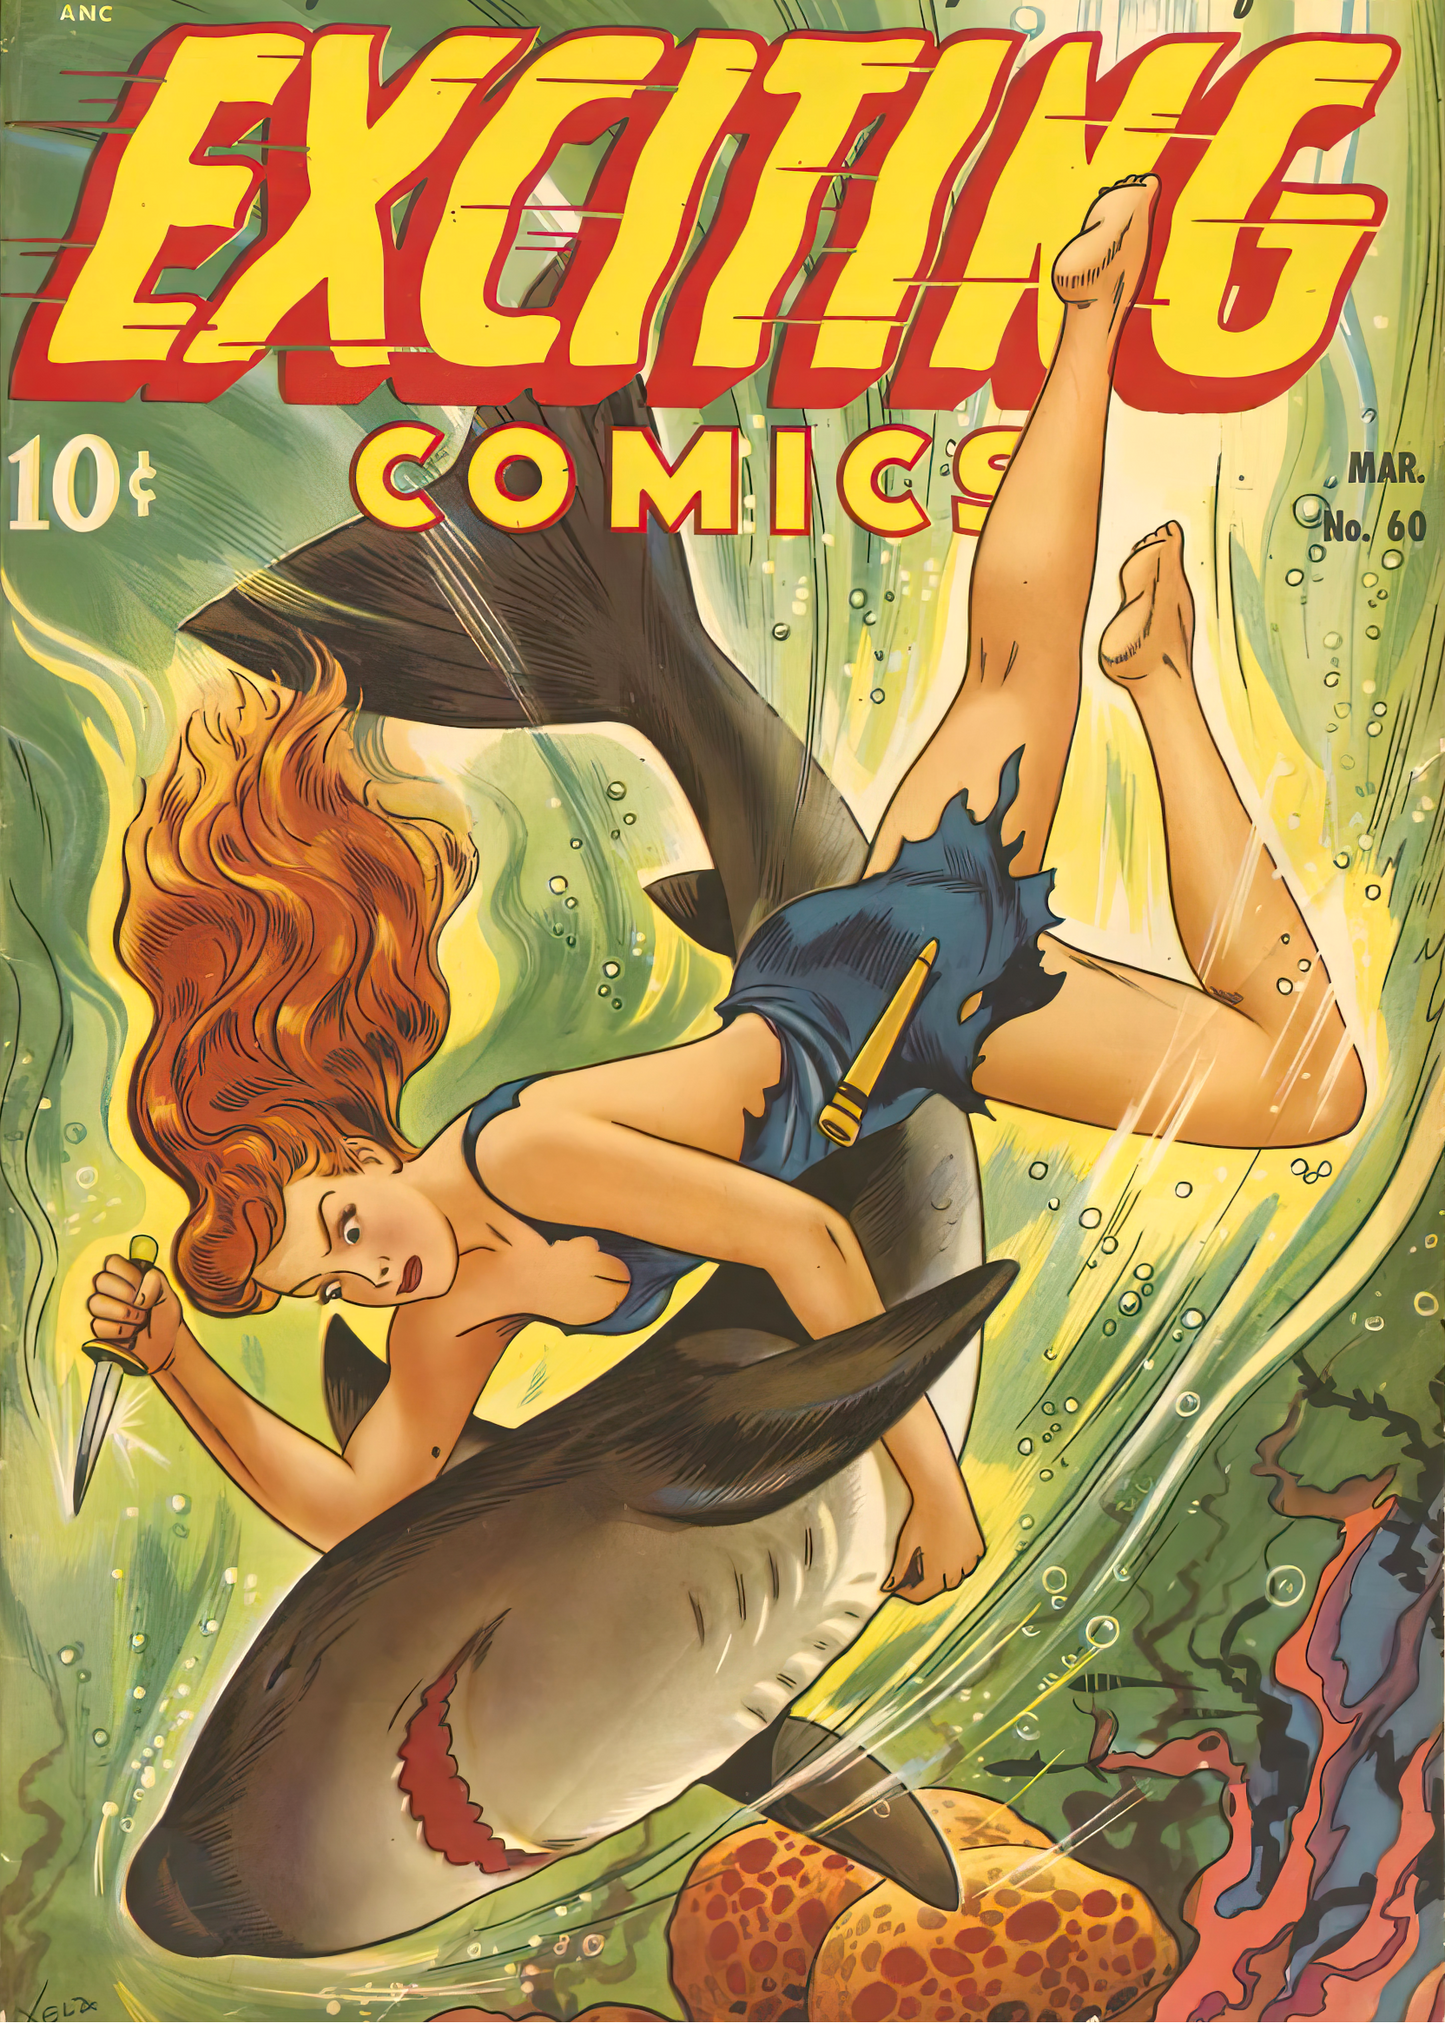 #1039 Exciting Comics #60